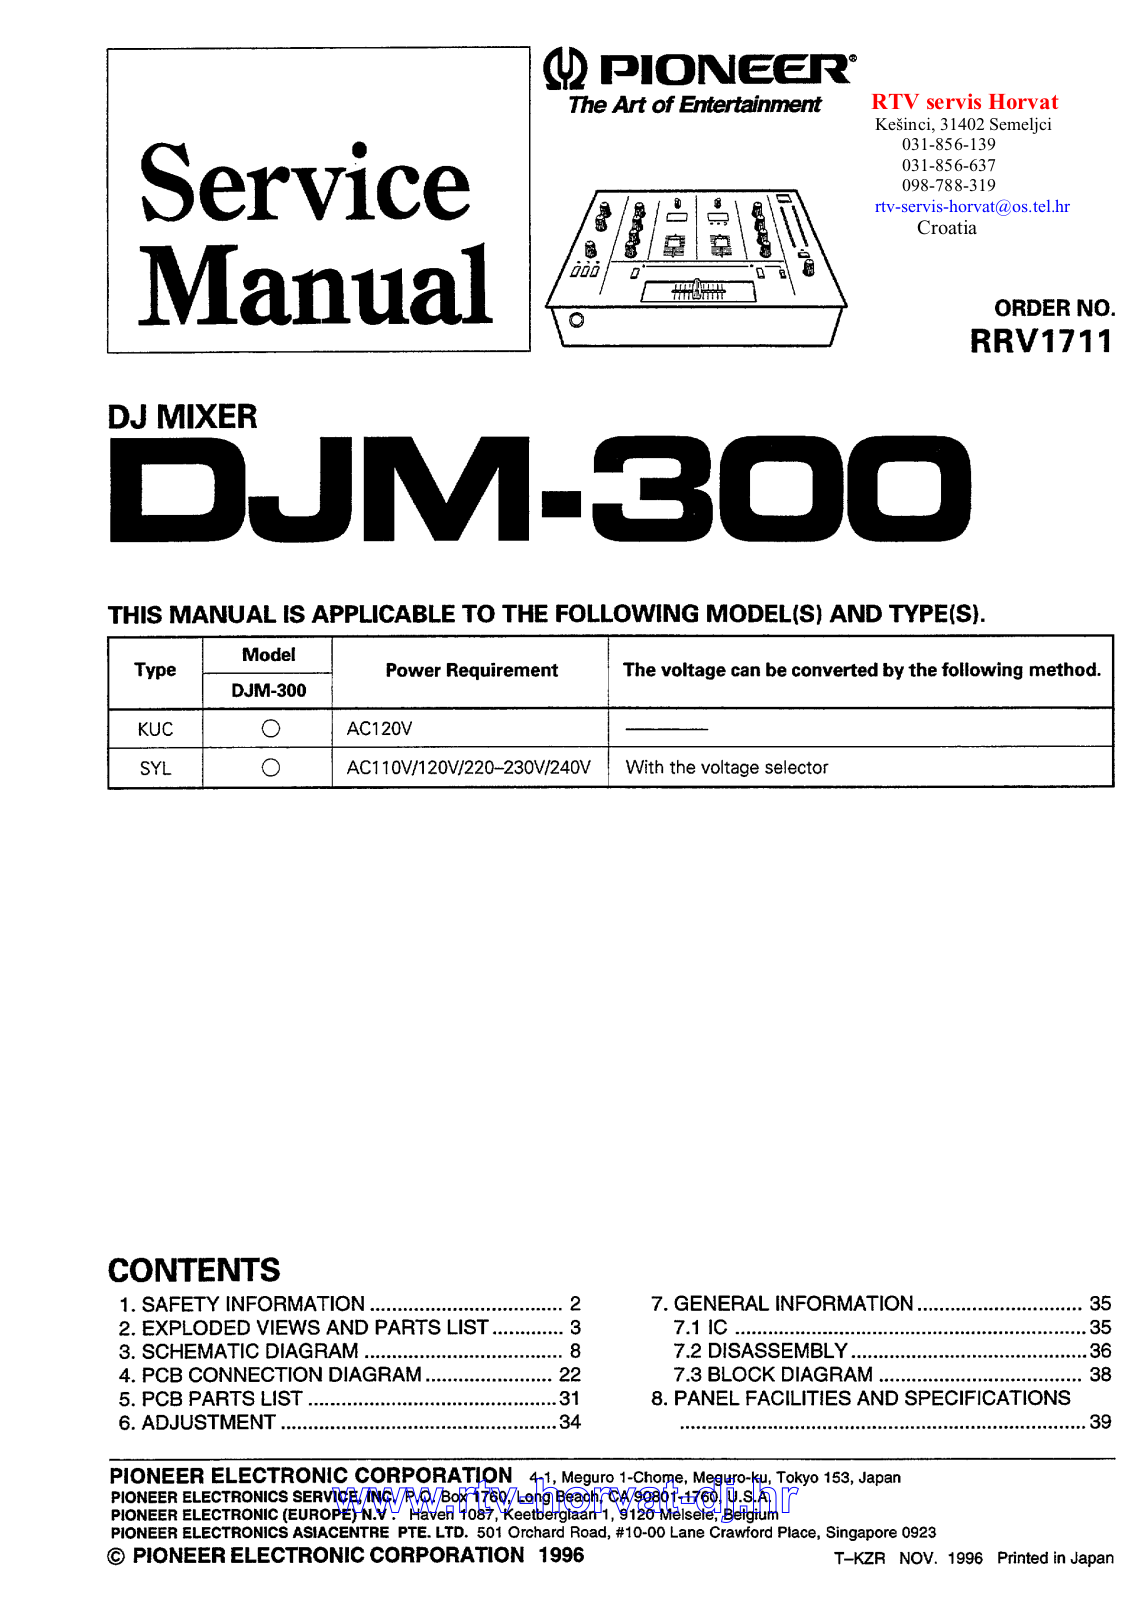 LG DJM 300 Service Manual